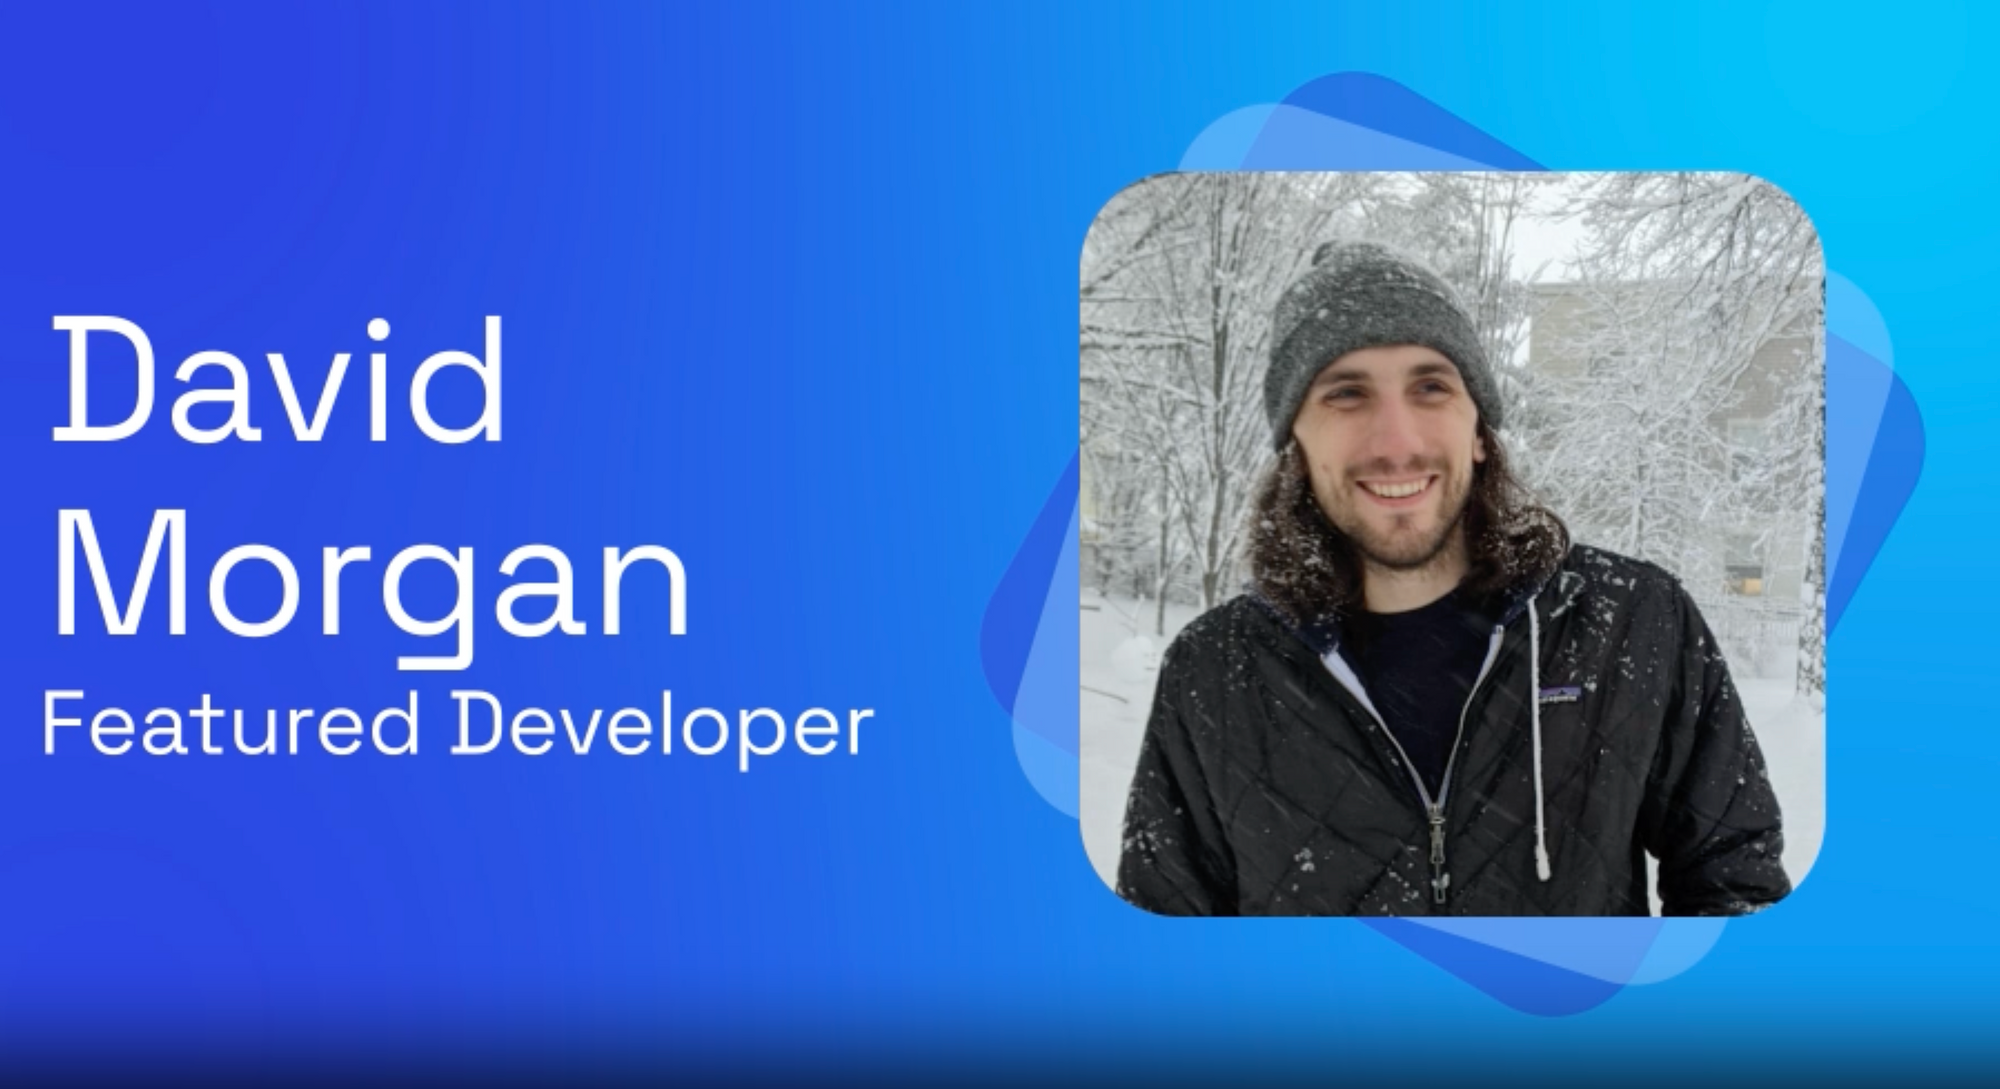 David Morgan: Featured Developer